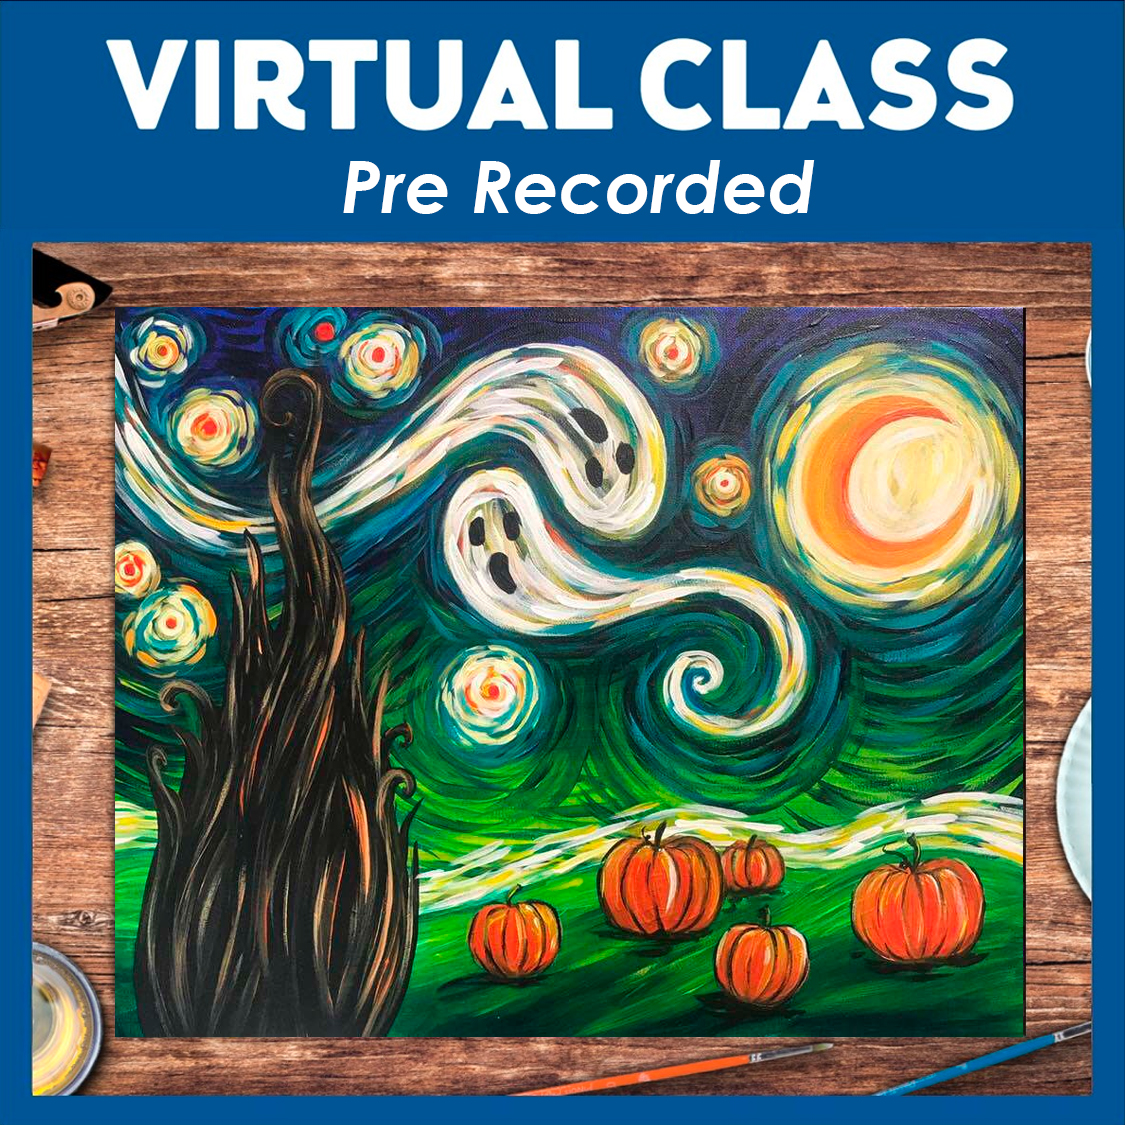 Van Gogh's Starry Night - Halloween 